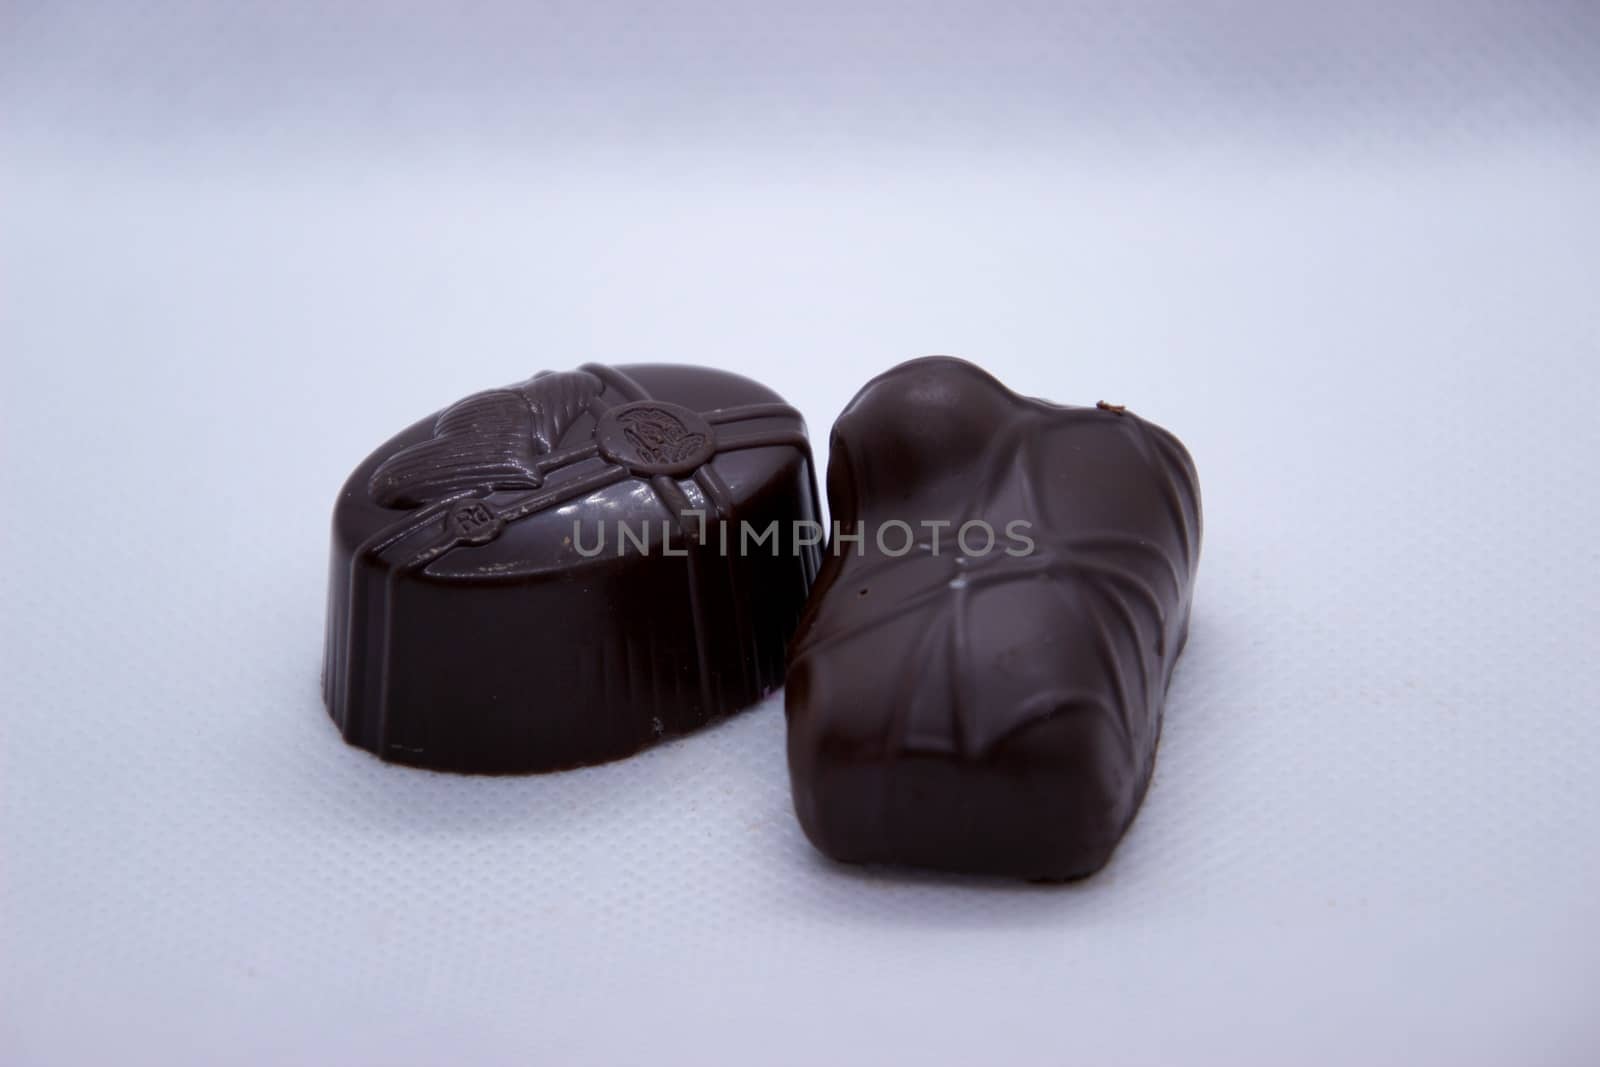 Chocolate macro - details